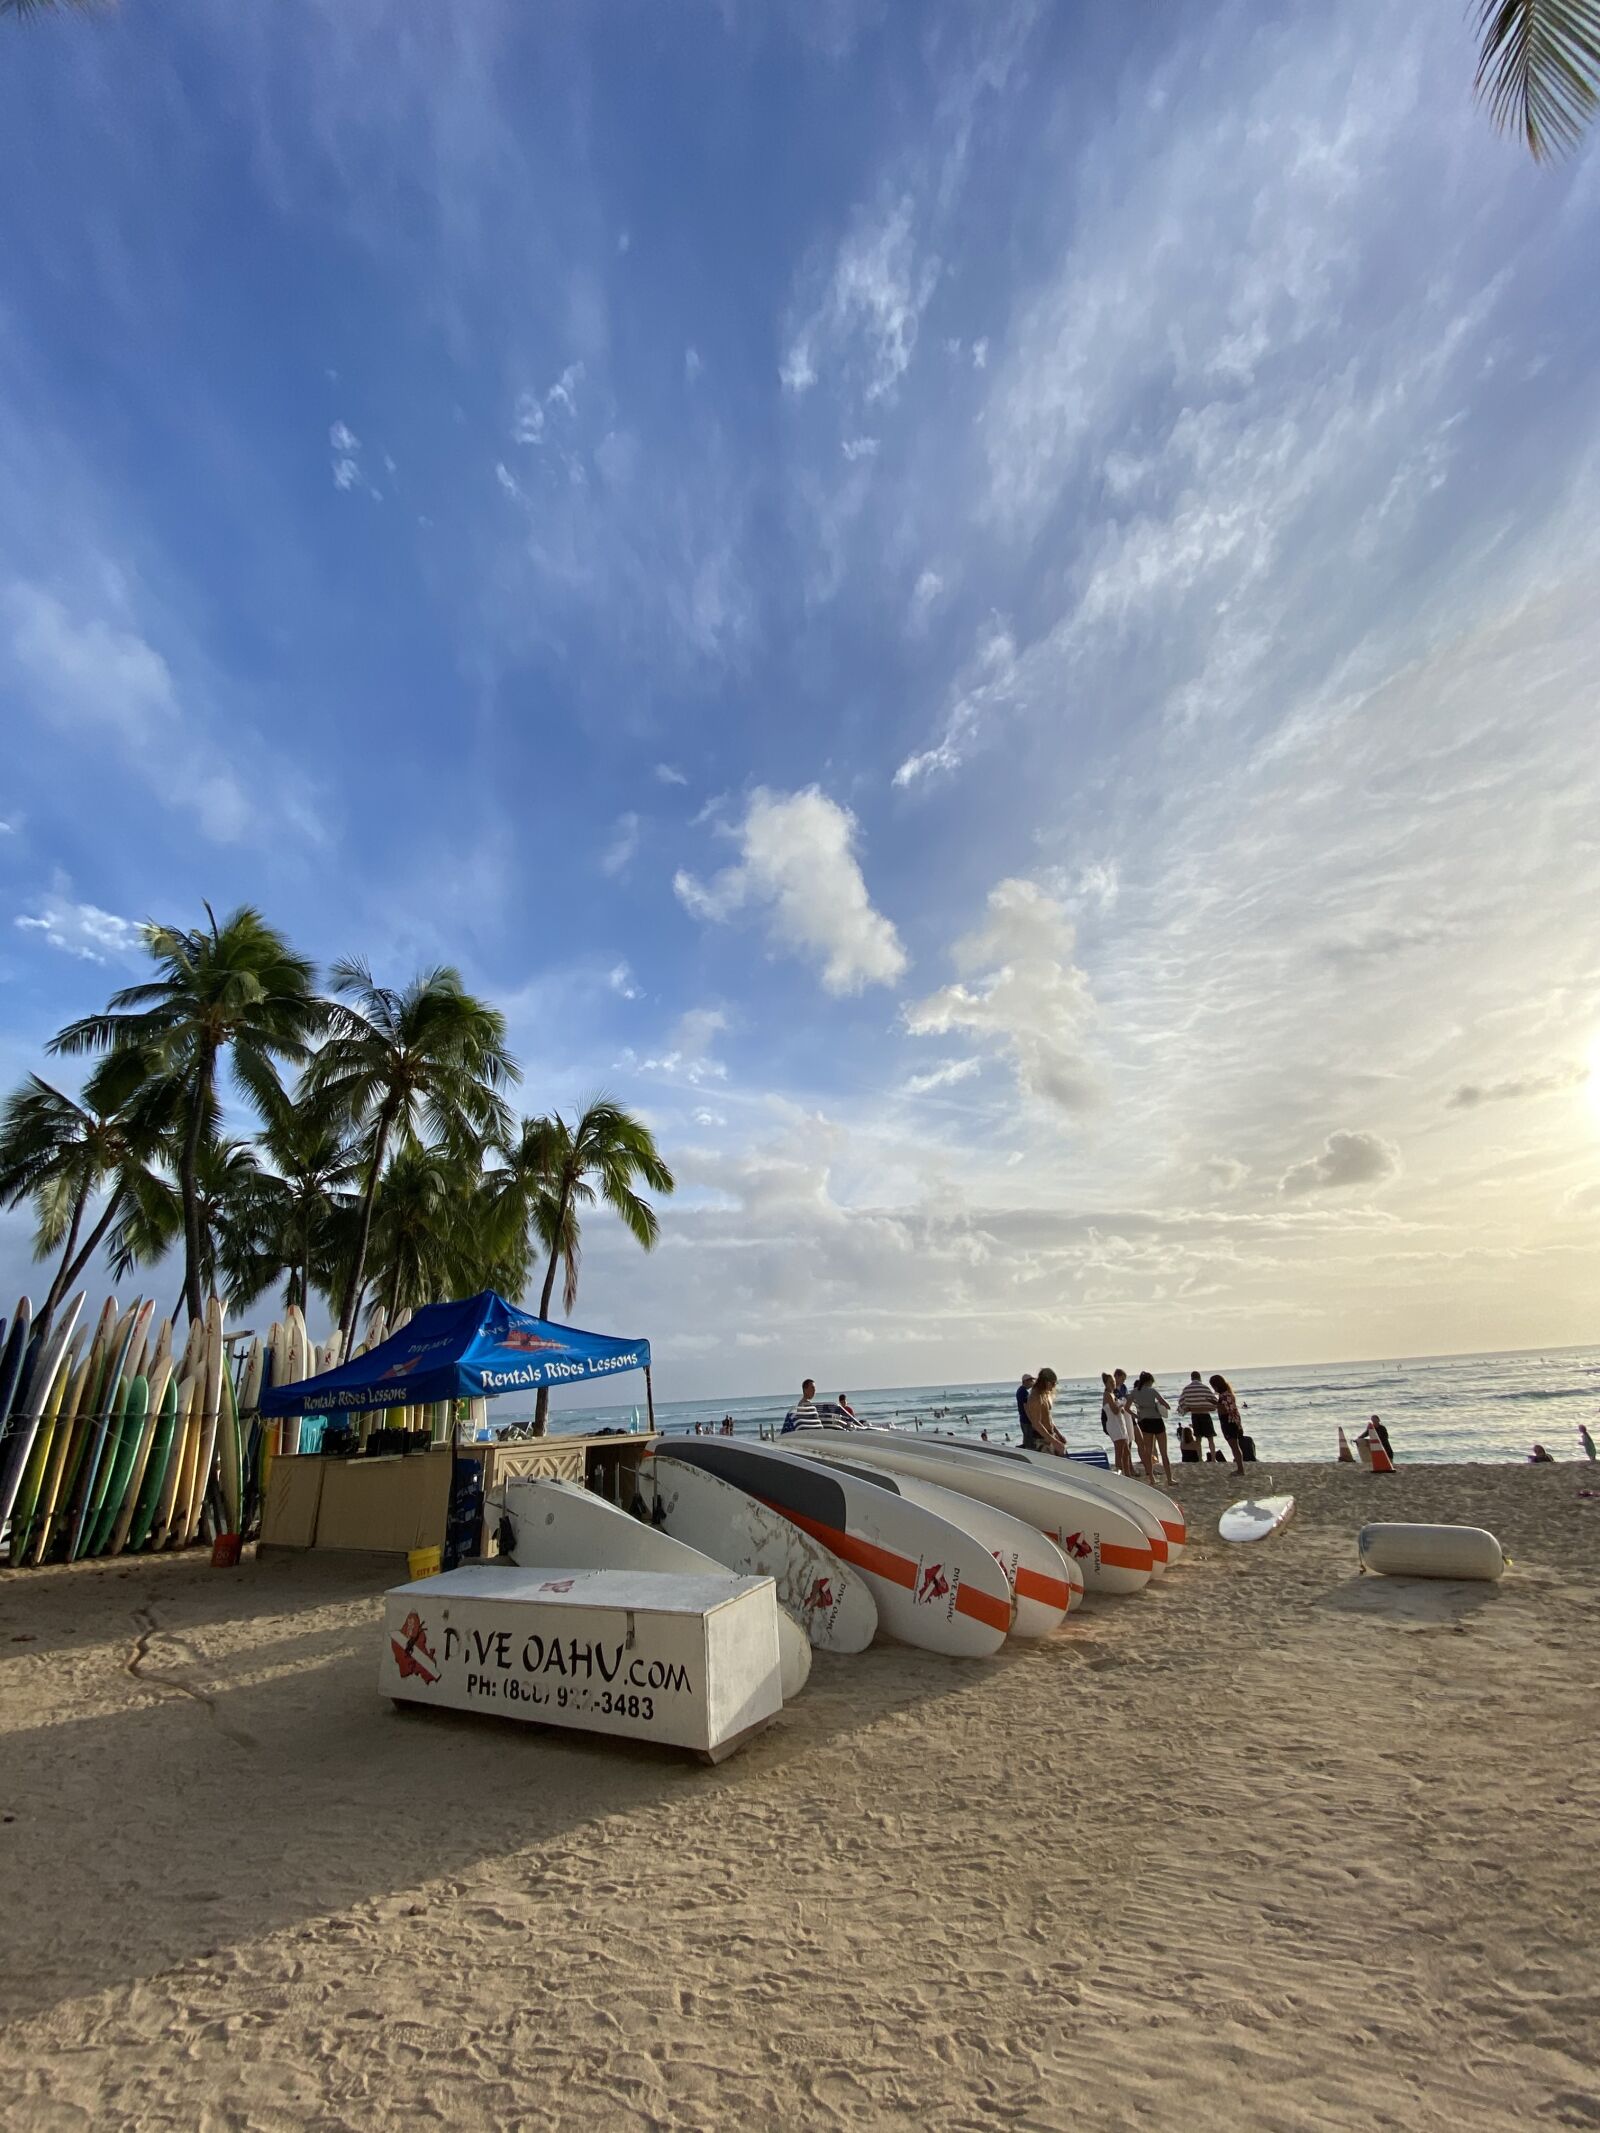 iPhone 11 Pro back triple camera 1.54mm f/2.4 sample photo. Hawaii, beach, ocean photography